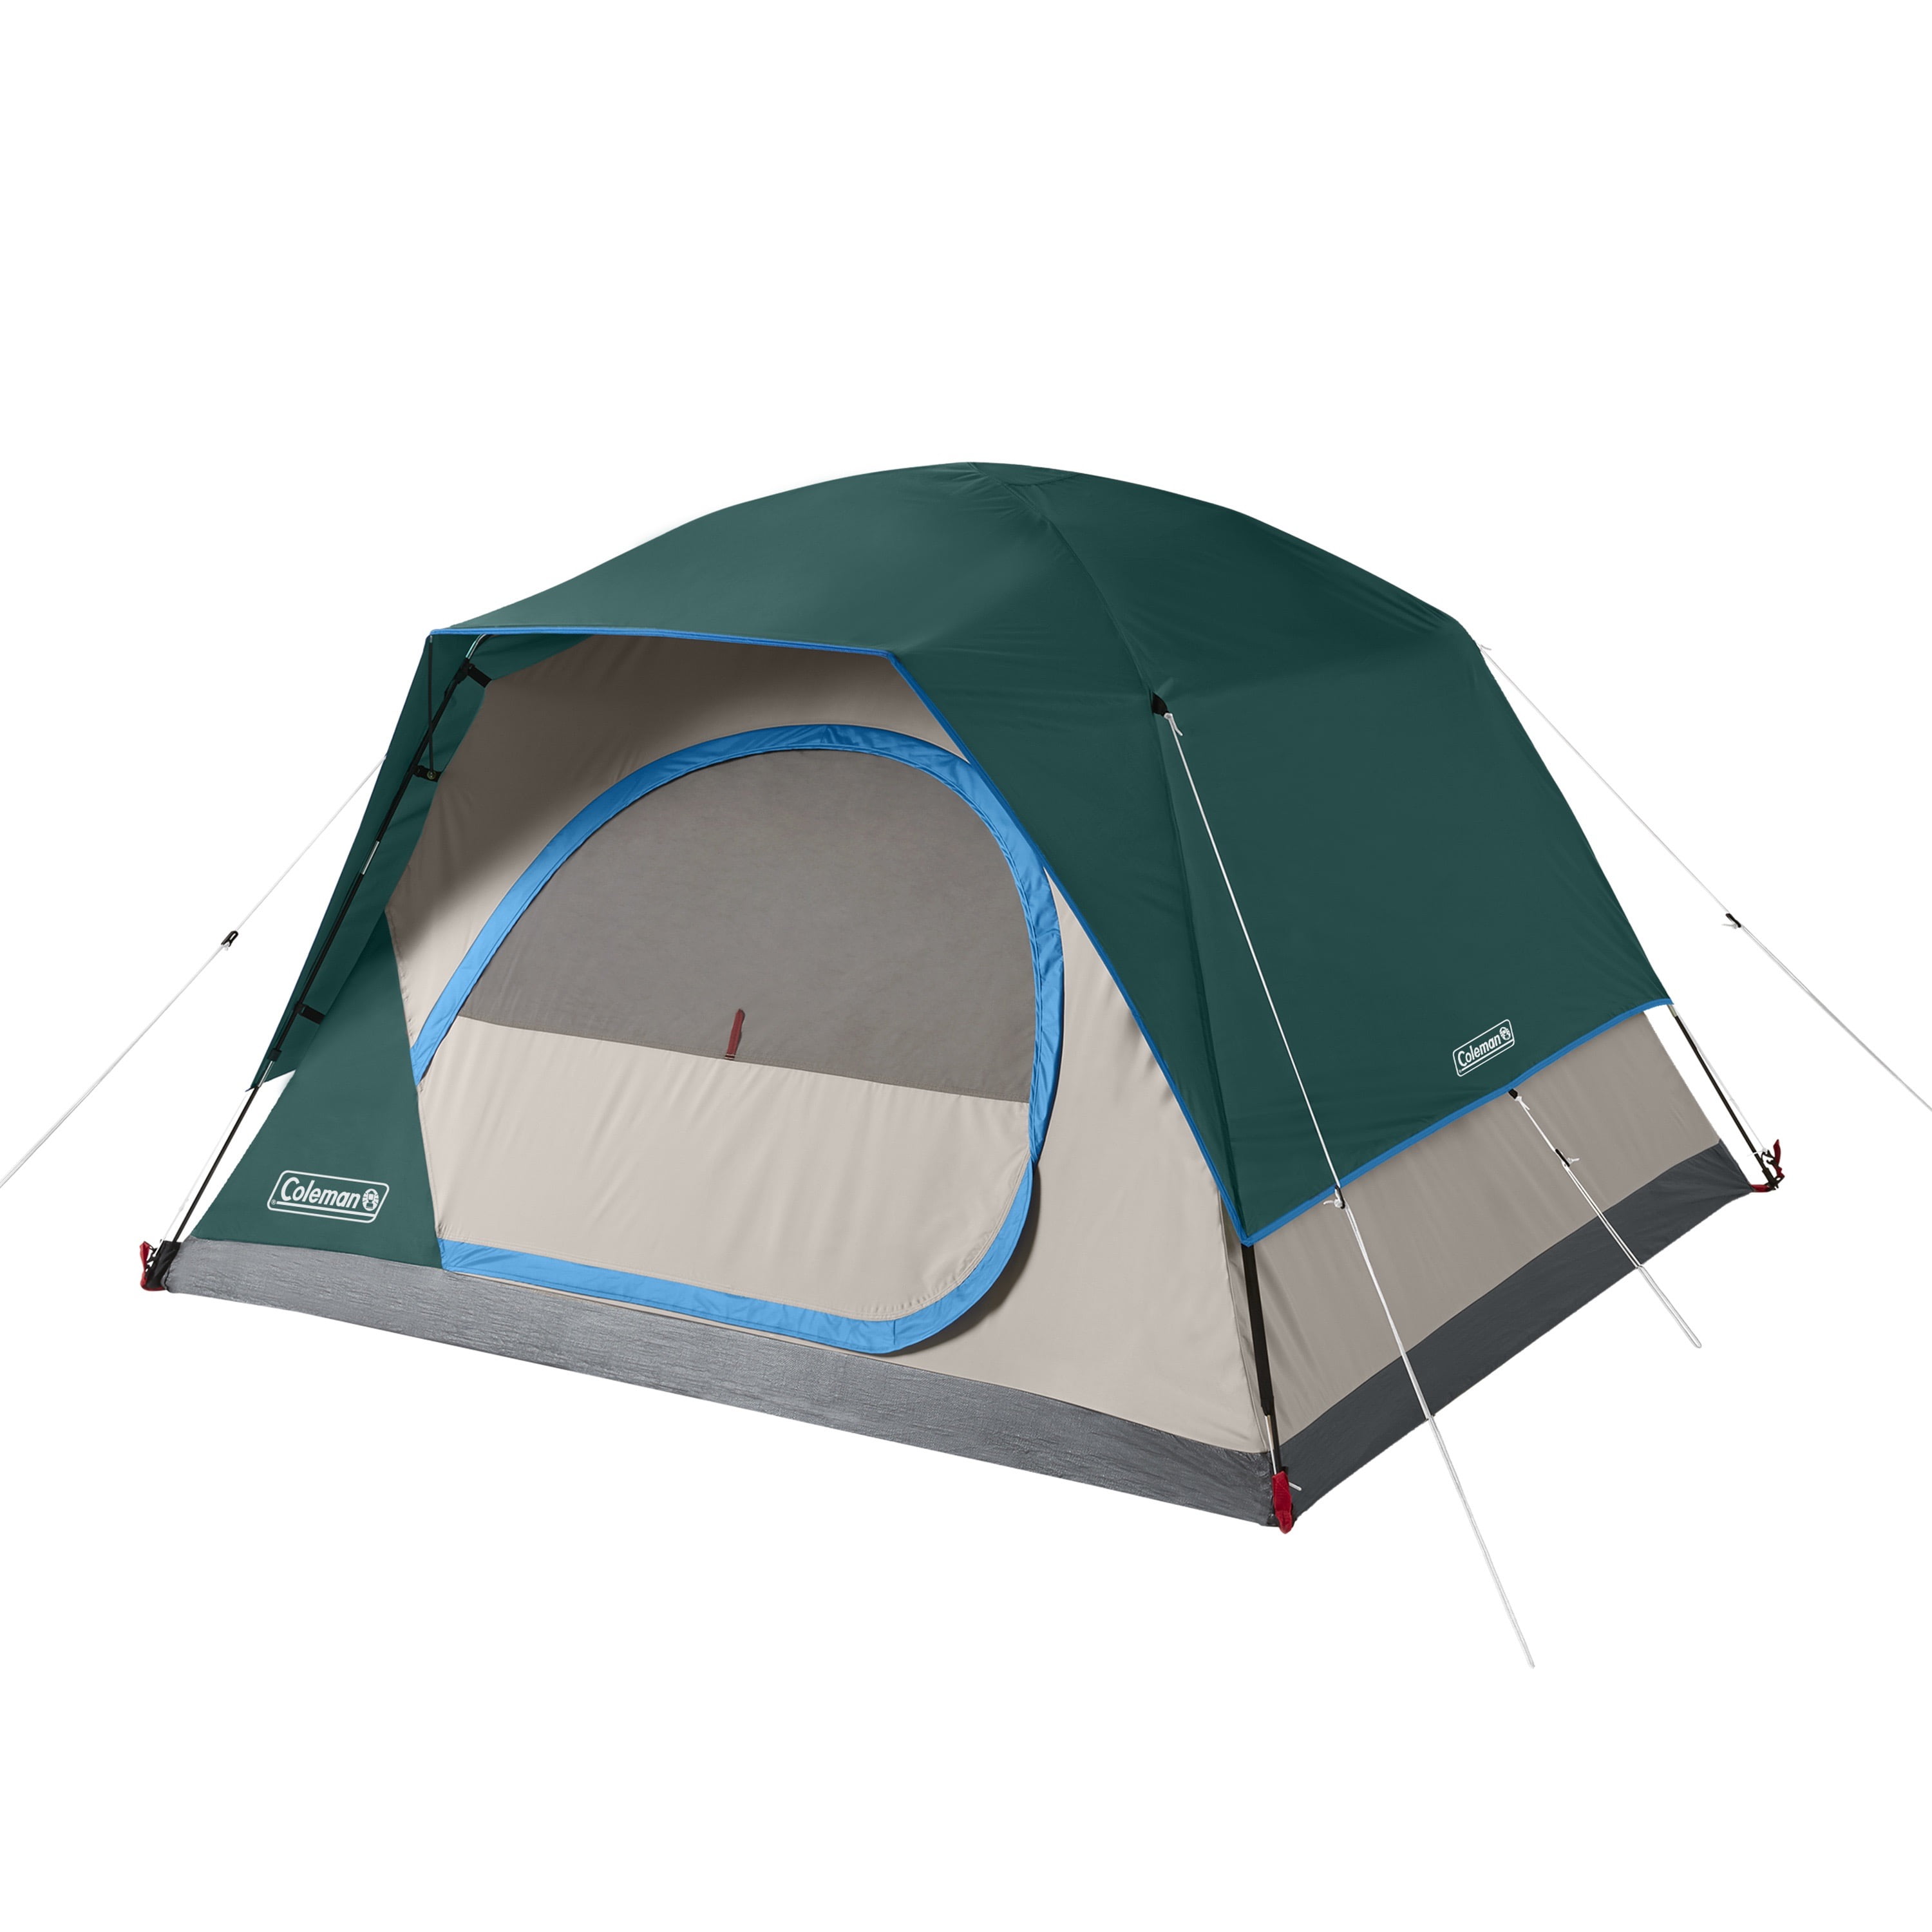 Grand lager adjektiv Coleman 4-Person Skydome Camping Tent, Evergreen - Walmart.com